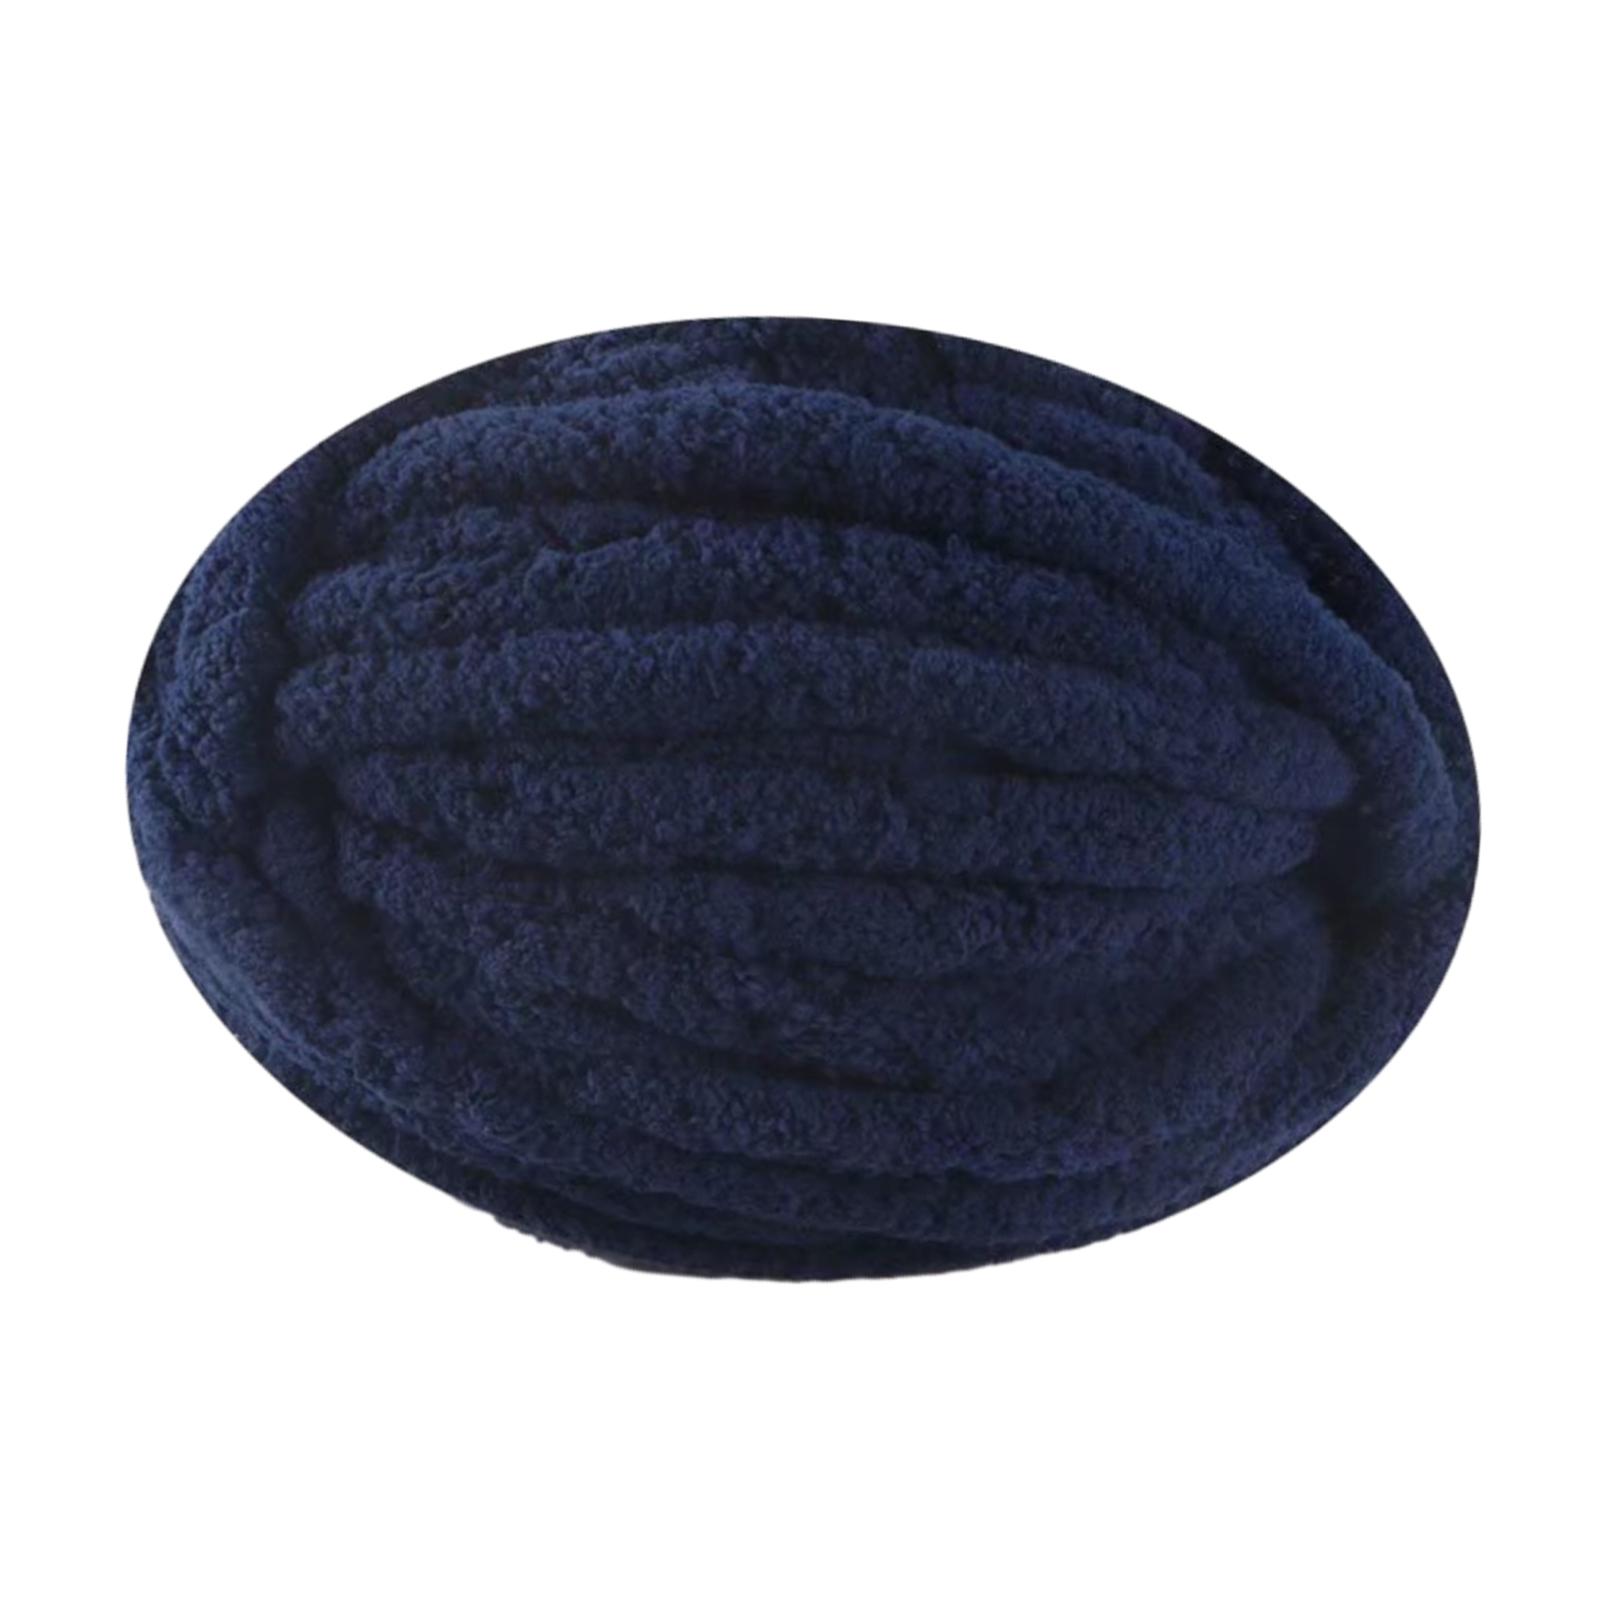 Thick Chunky Yarn Chunky Wool Yarn Bulky Yarn for Crocheting Arm Knitting Yarn Weight Yarn Knit Yarn for Knitted Blanket Mat Weaving Sweater Dark Blue